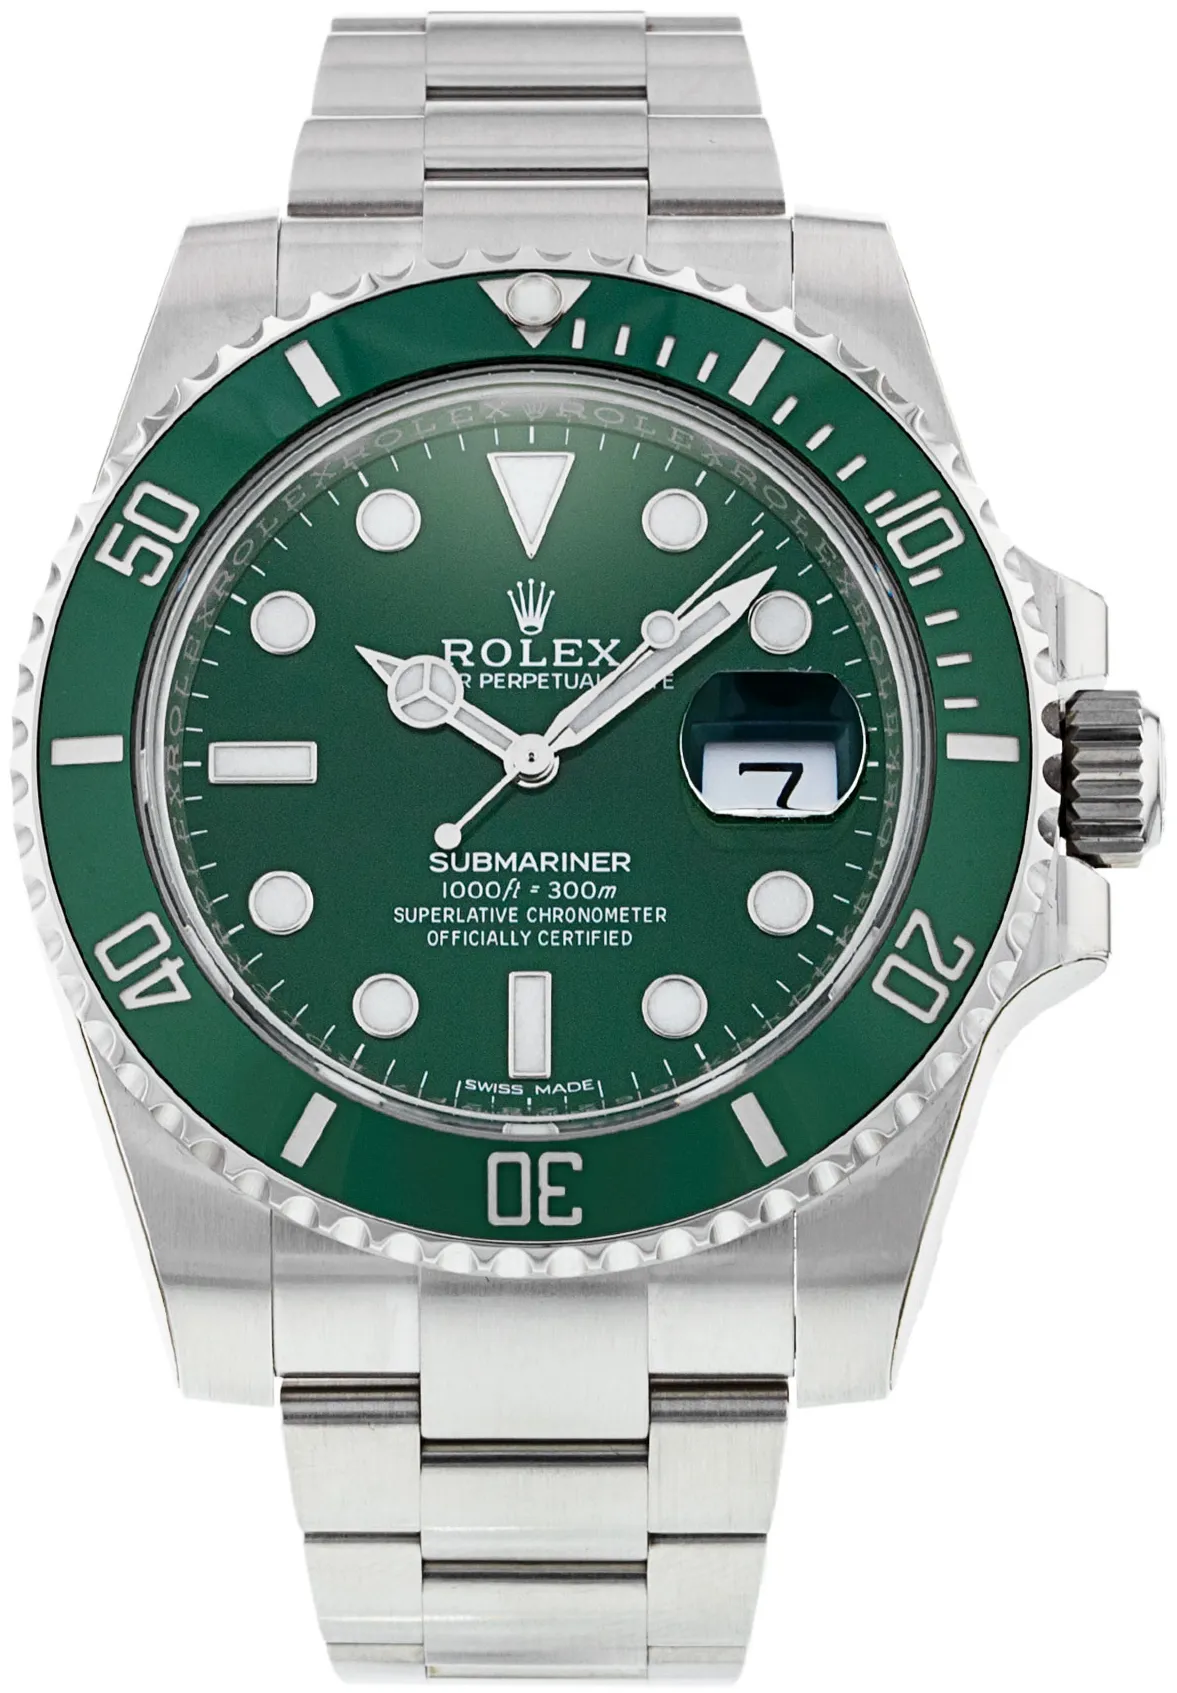 Rolex Submariner 116610LV 40mm Stainless steel Green